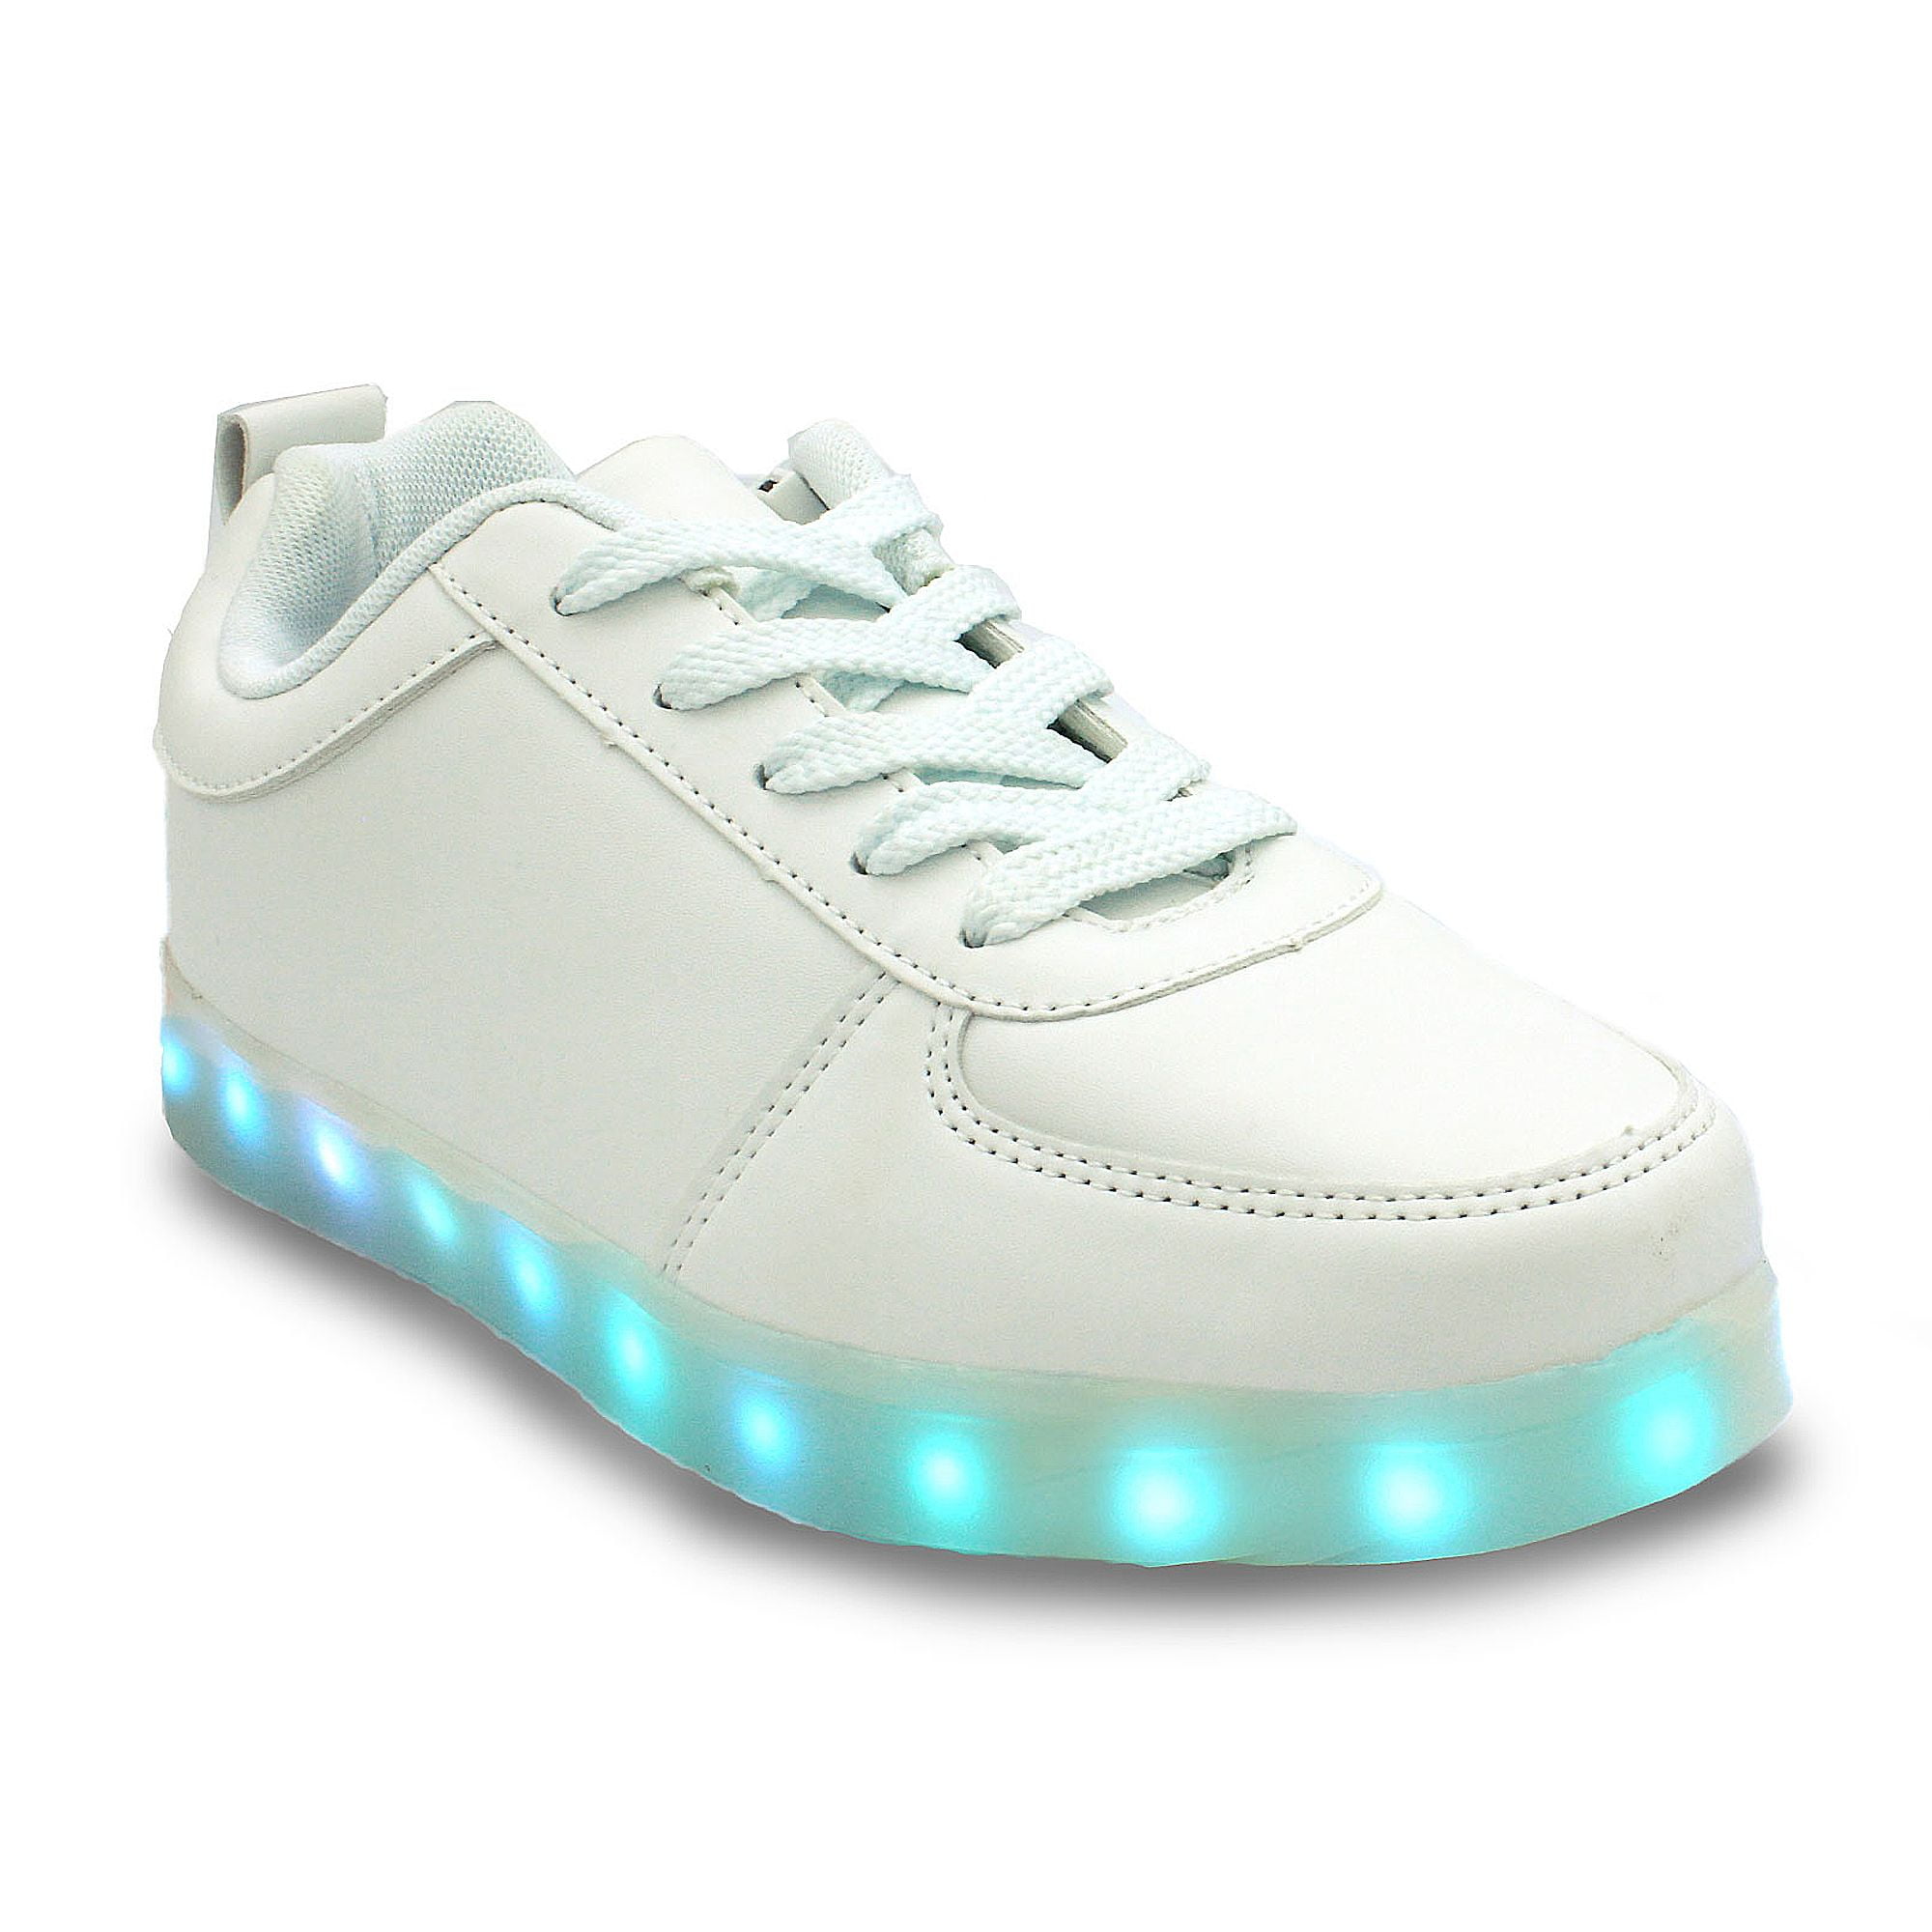 Family Smiles LED Light Up Sneakers Kids Low Boys Girls Unisex Lace Up White Toddler US 10 / EU 27 Walmart.com